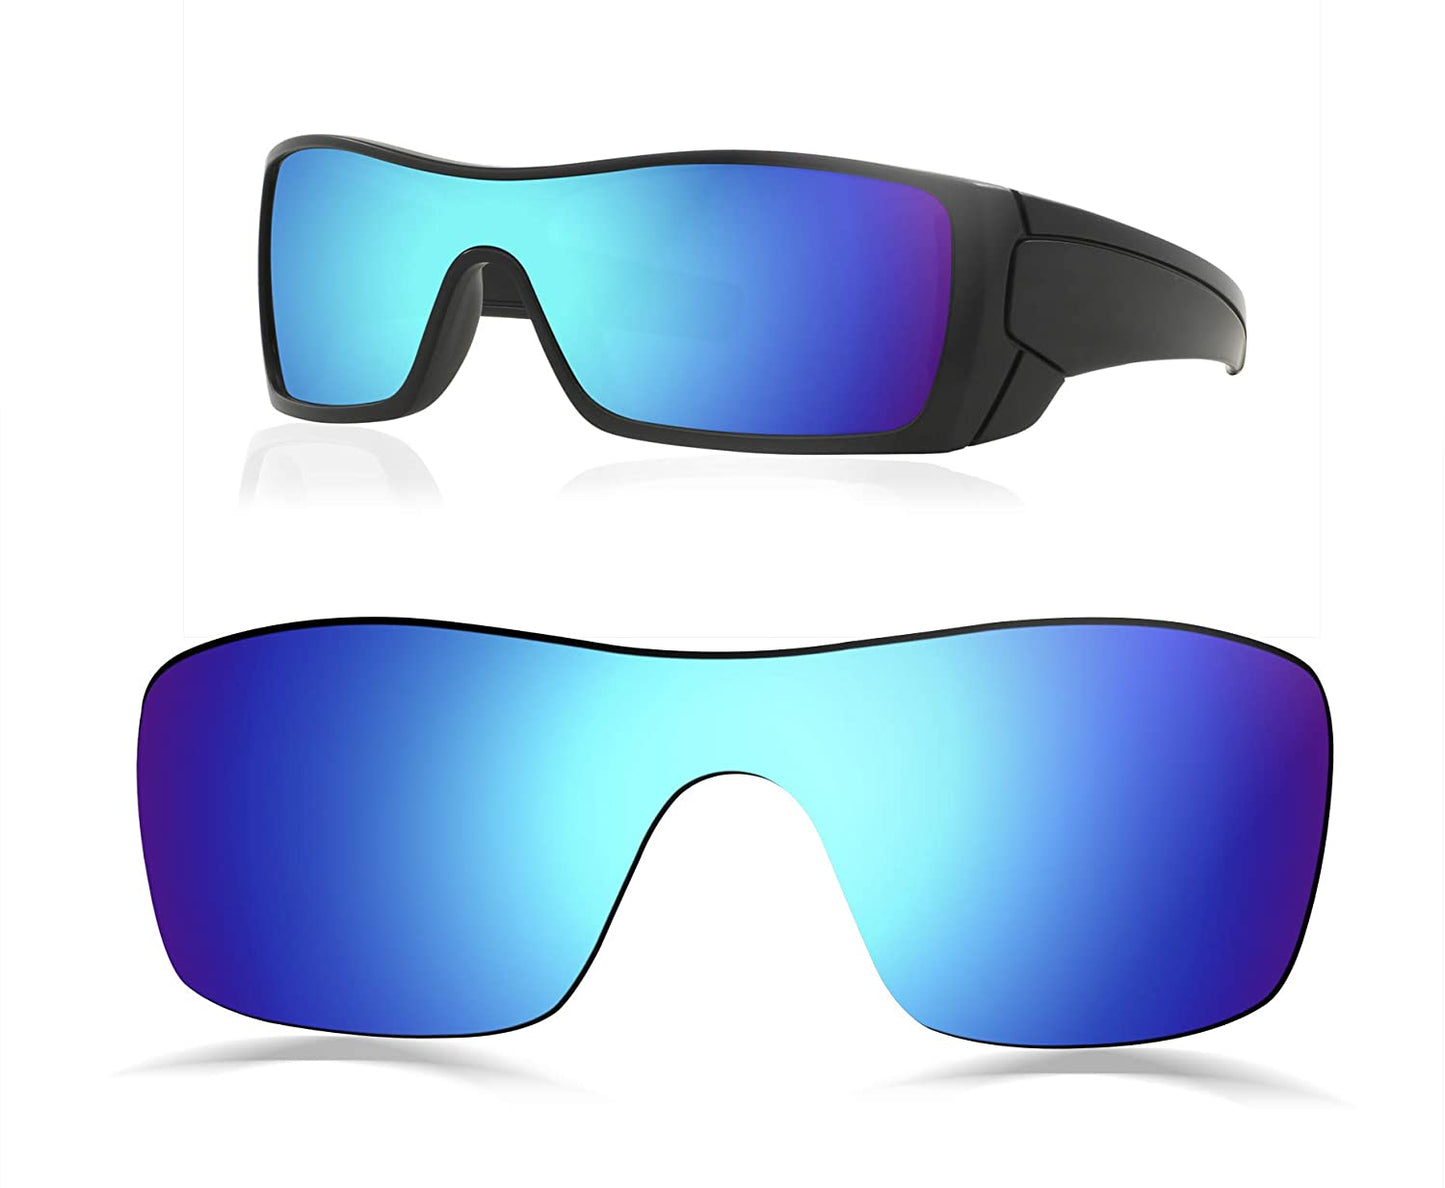 Prizo Polarized Replacement Lenses for Oakley Batwolf Sunglasses - Multi Options